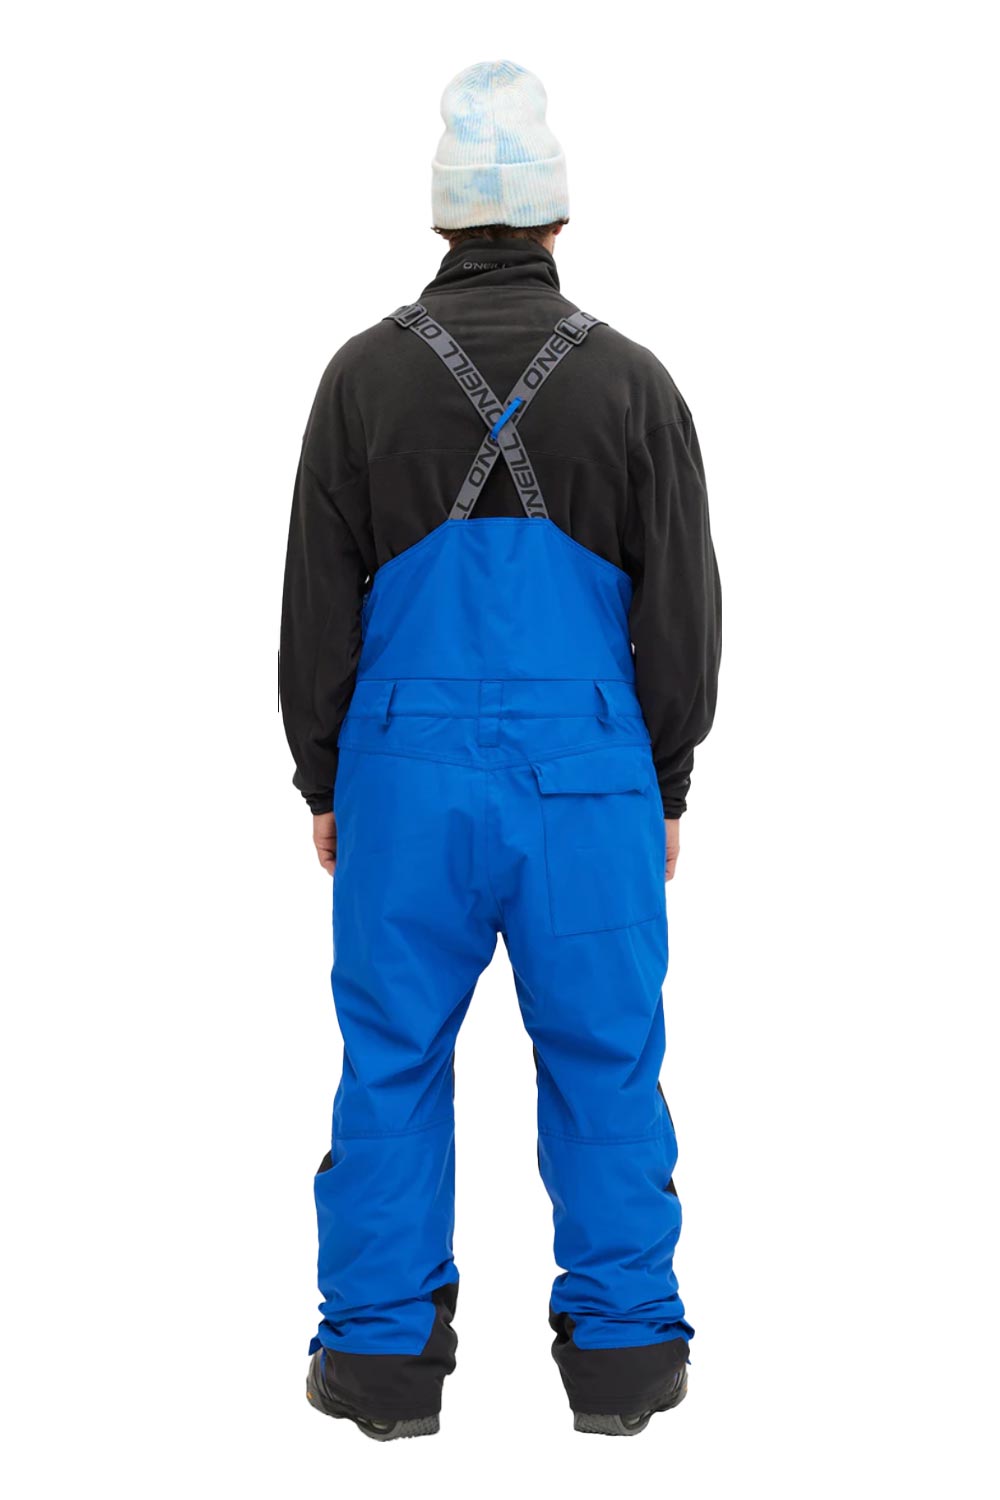 O'neill Shred Bib snow pants, blue